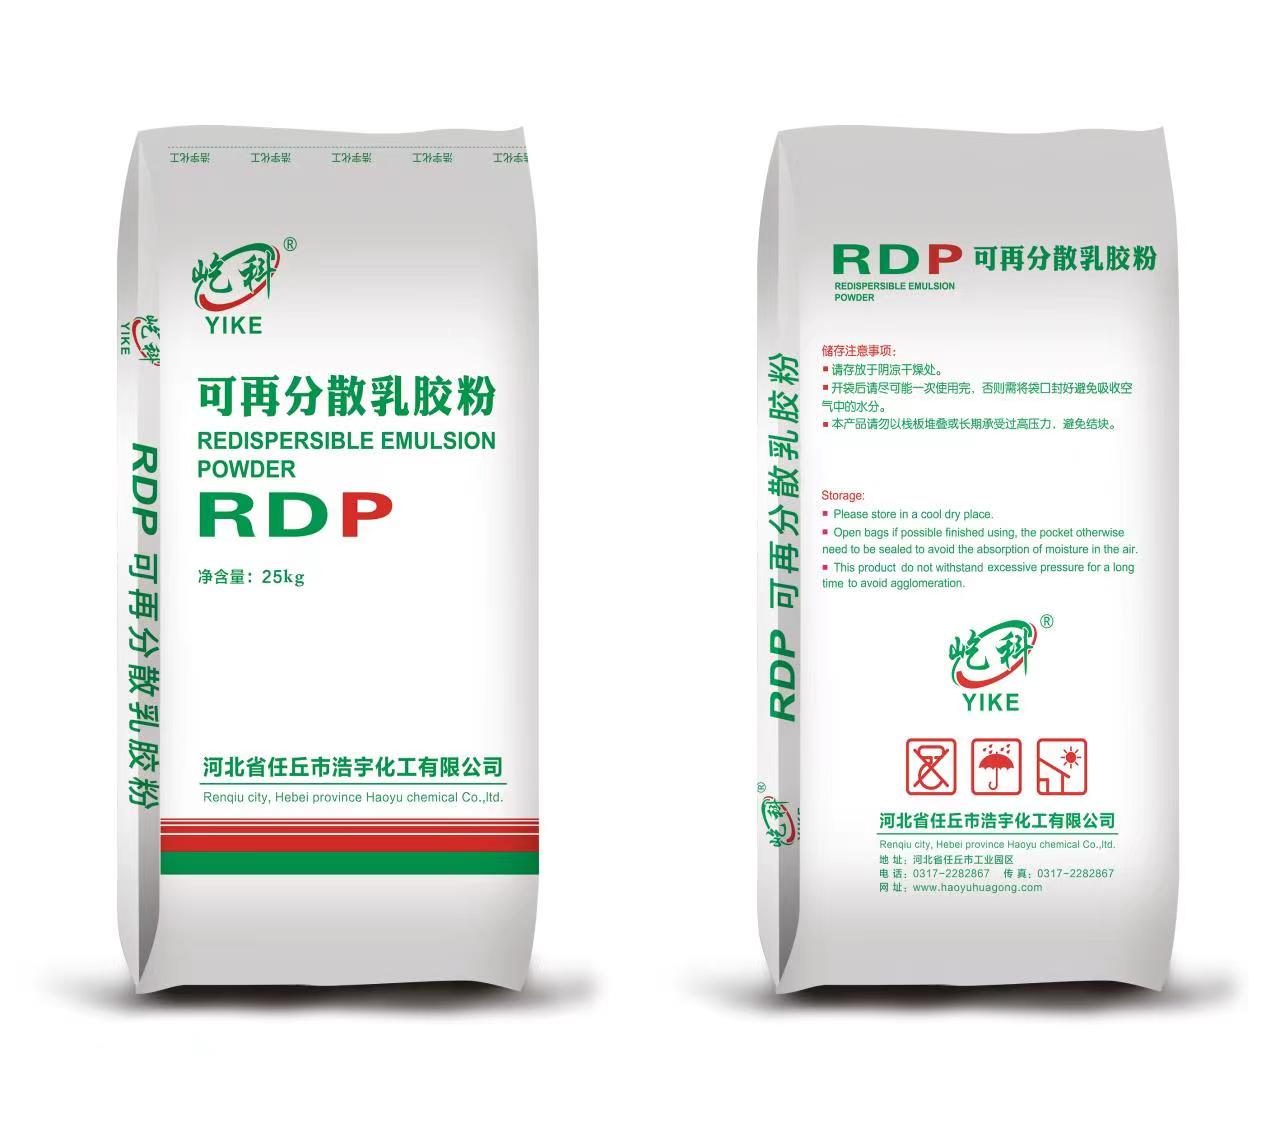 RDP(redispersible emulsion powder)